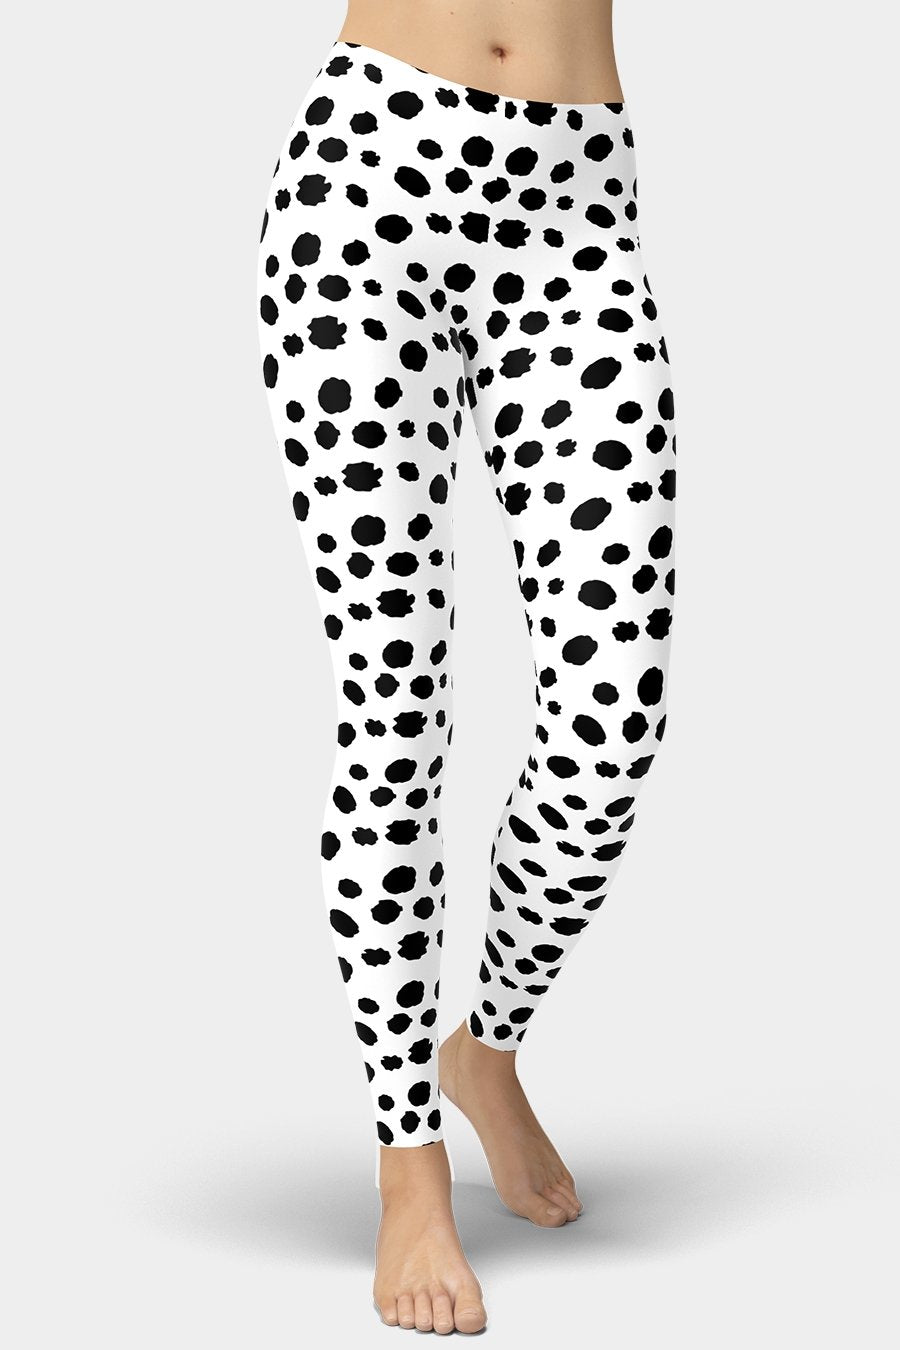 Dalmatian Dog Leggings - SeeMyLeggings